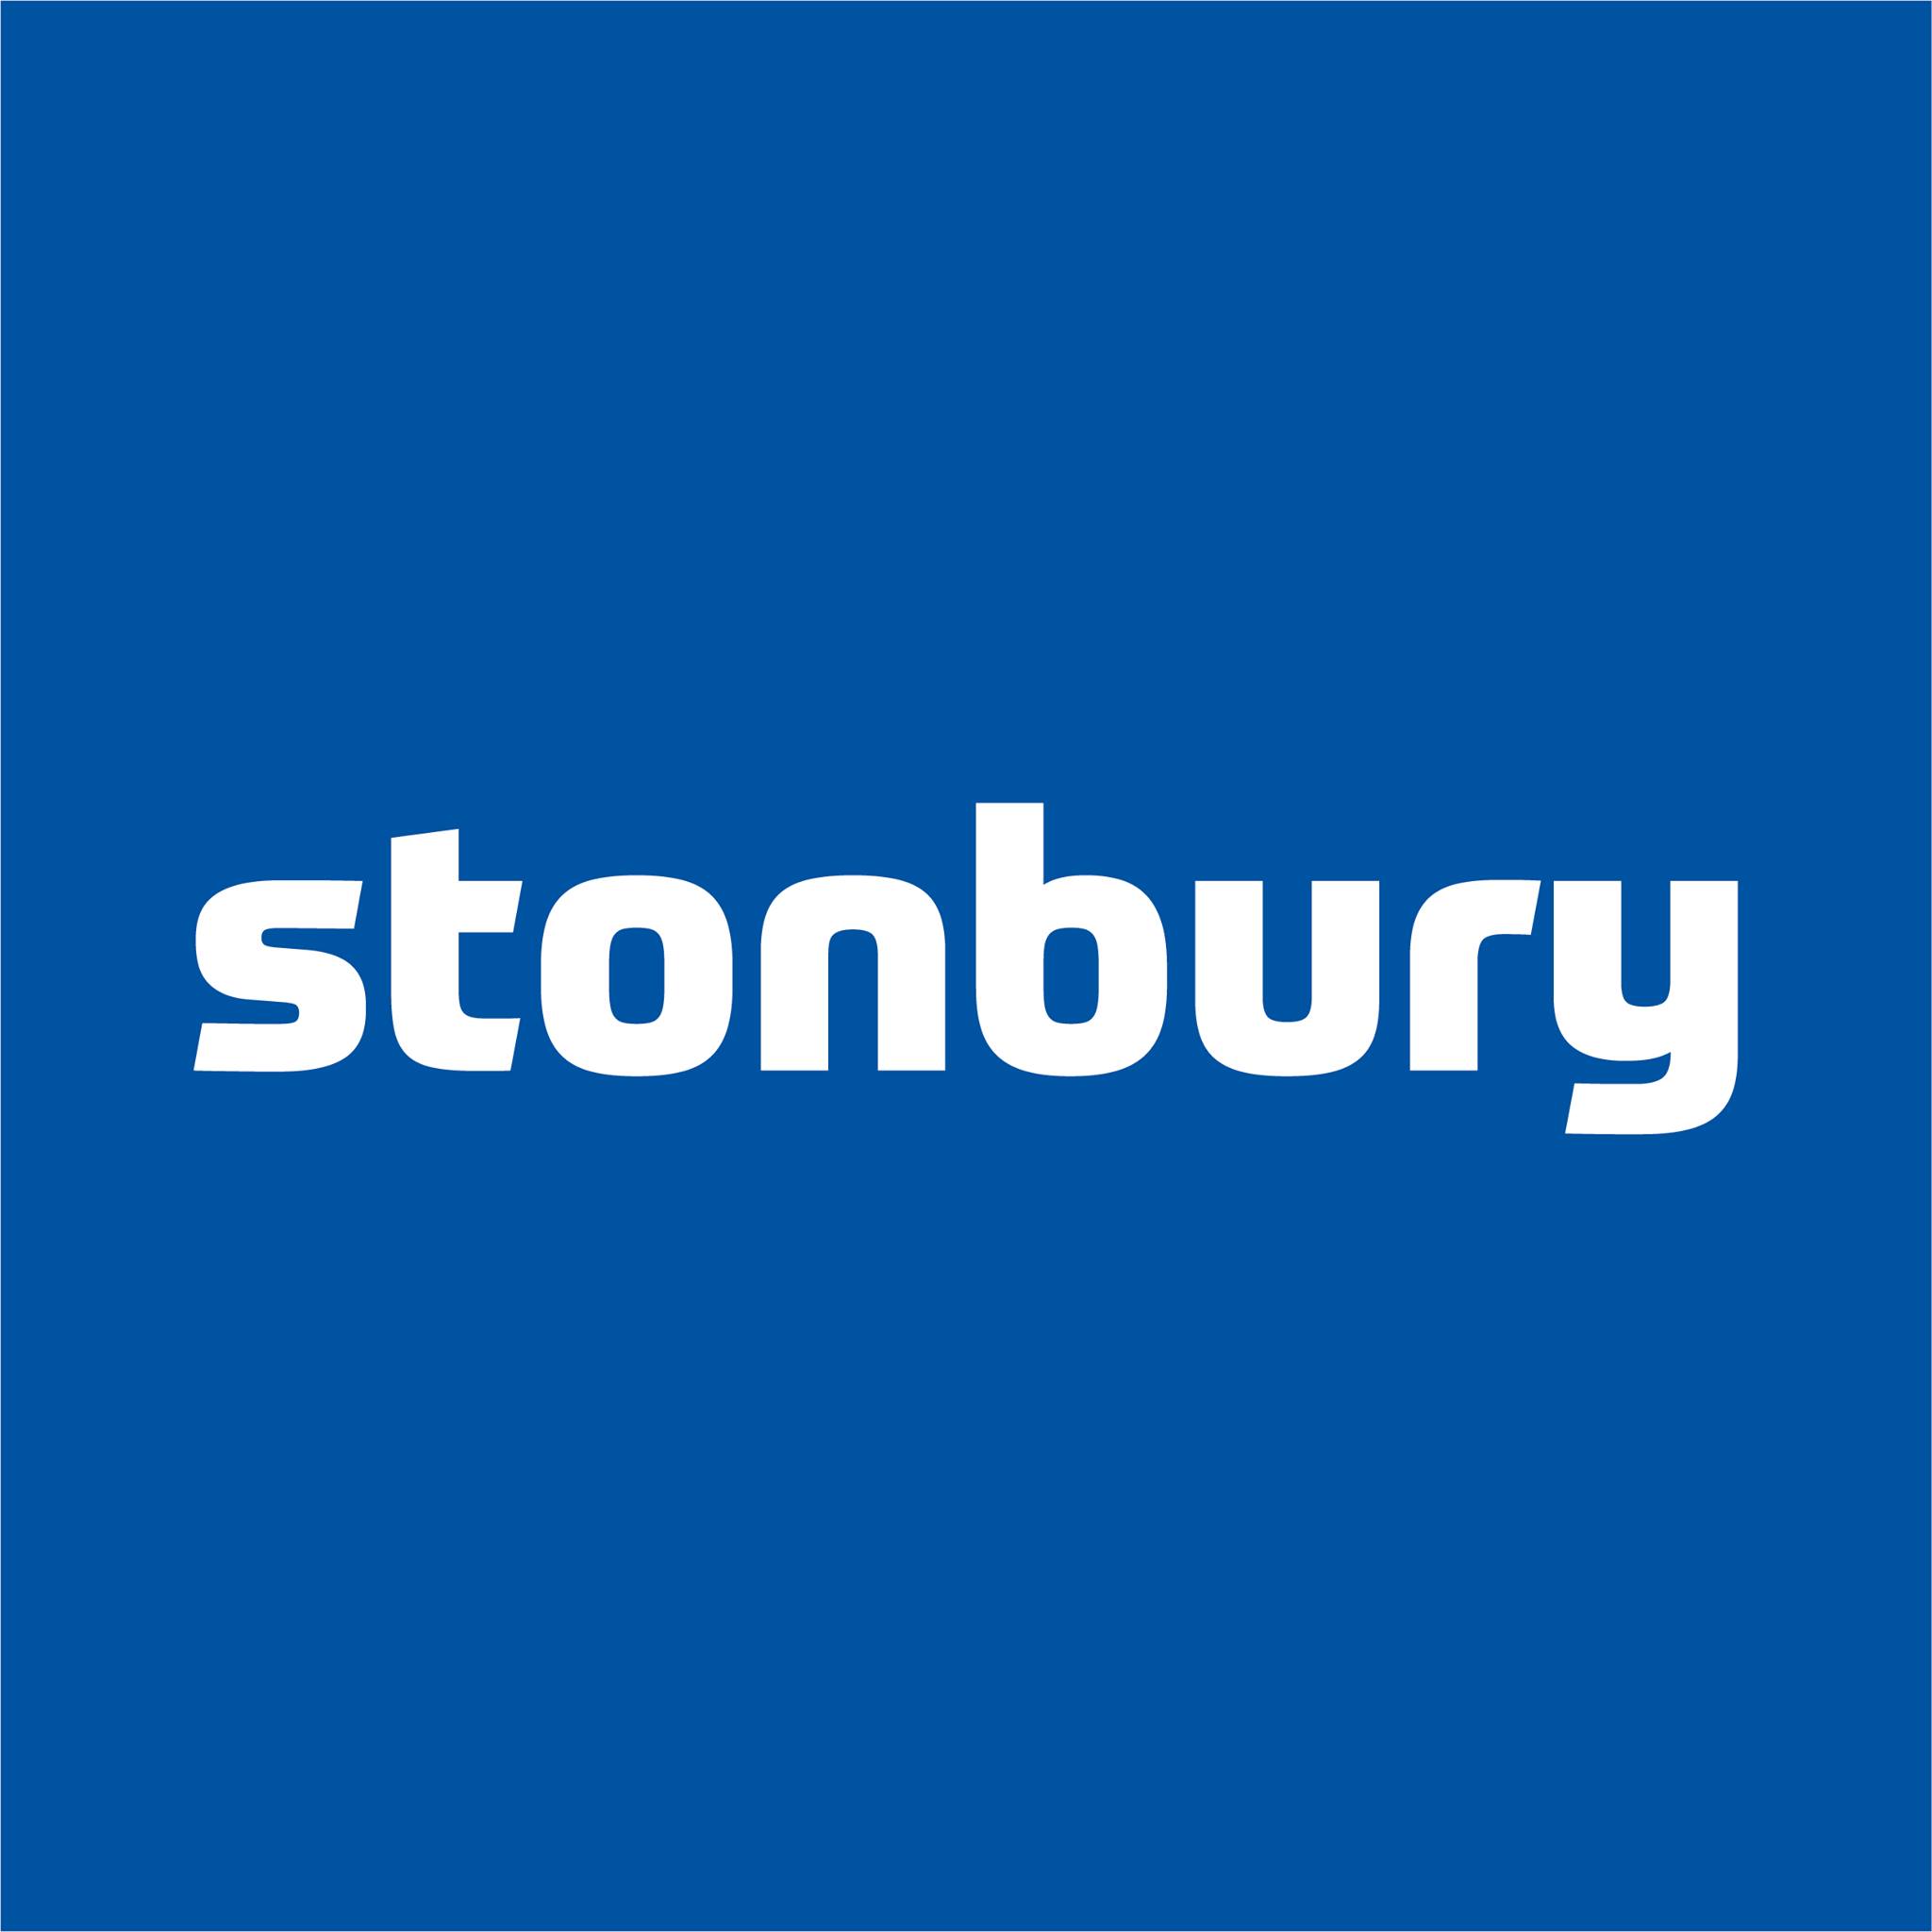 Stonbury - Construction Site SHEW Inspection 